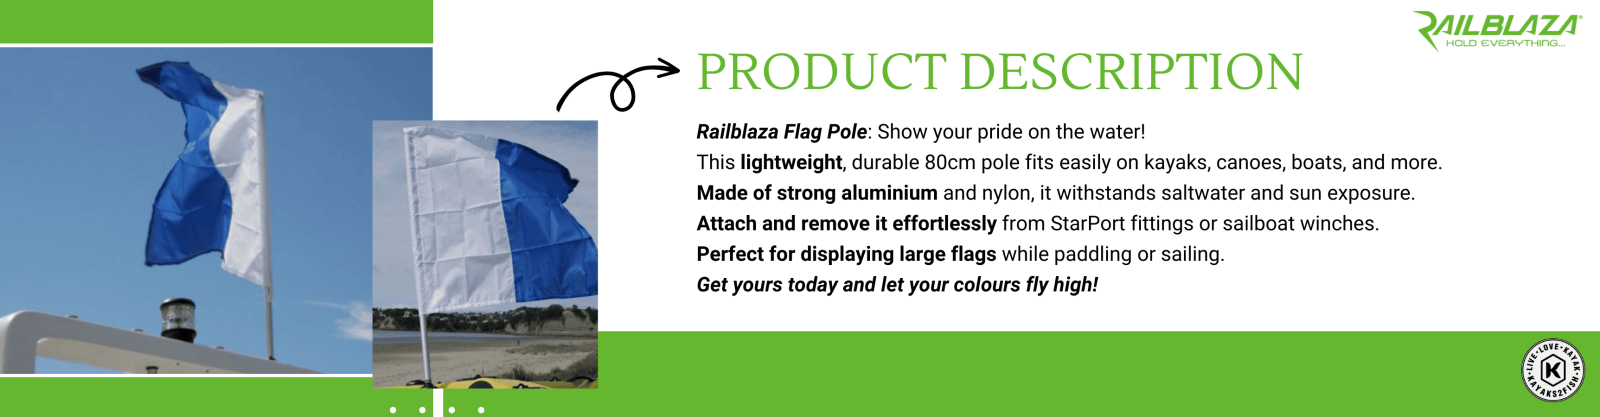 Railblaza Flag Pole